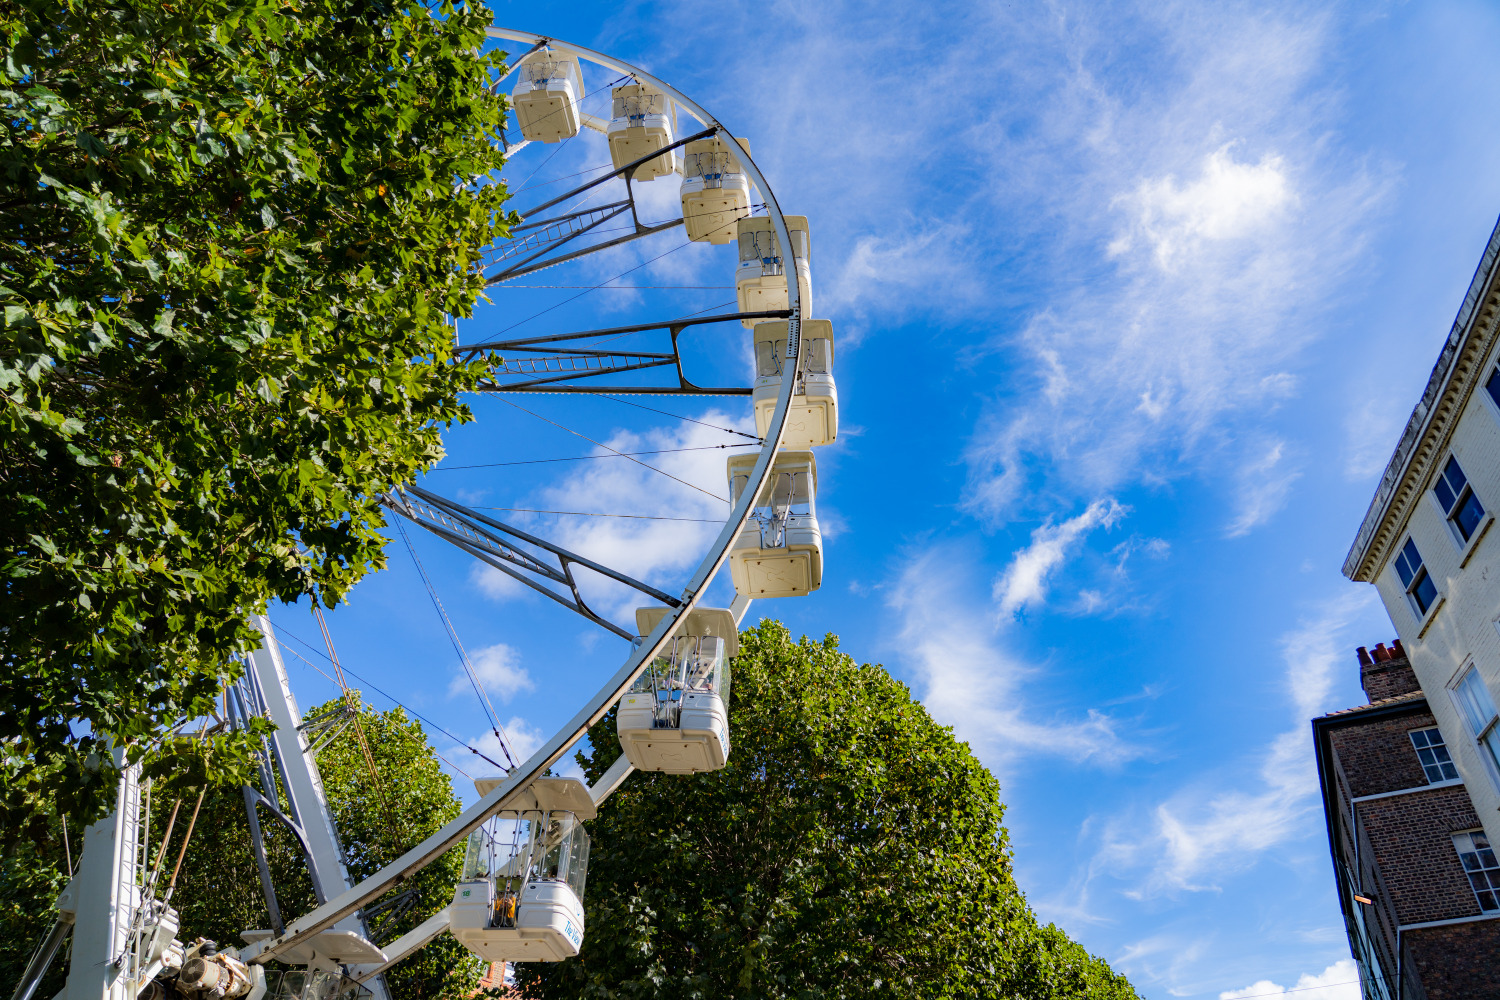 Ferris Wheel in York